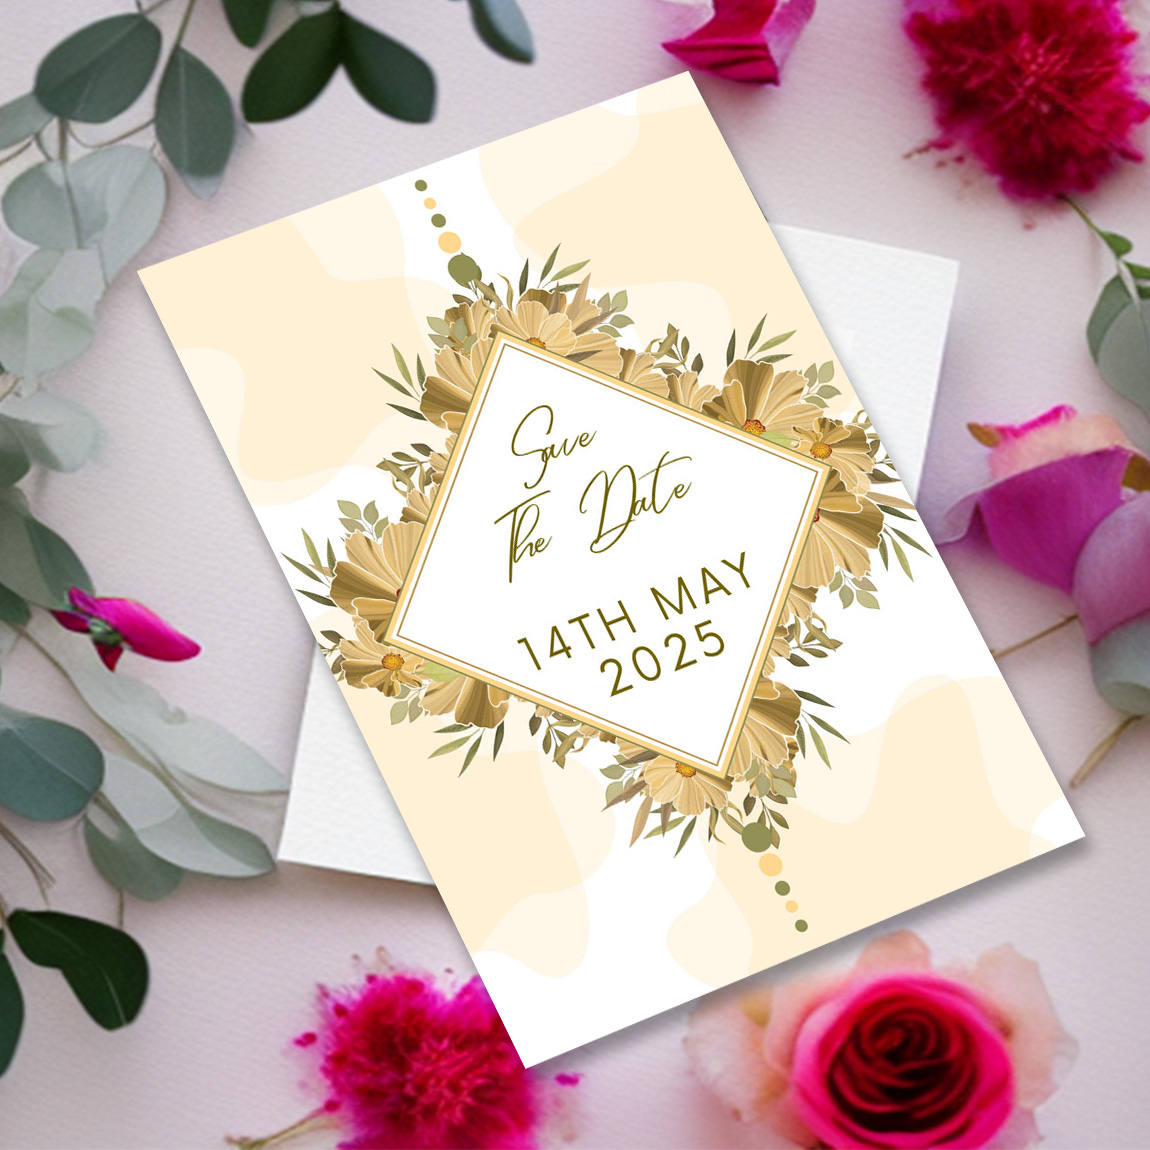 Image with elegant pastel wedding invitation and flowers.